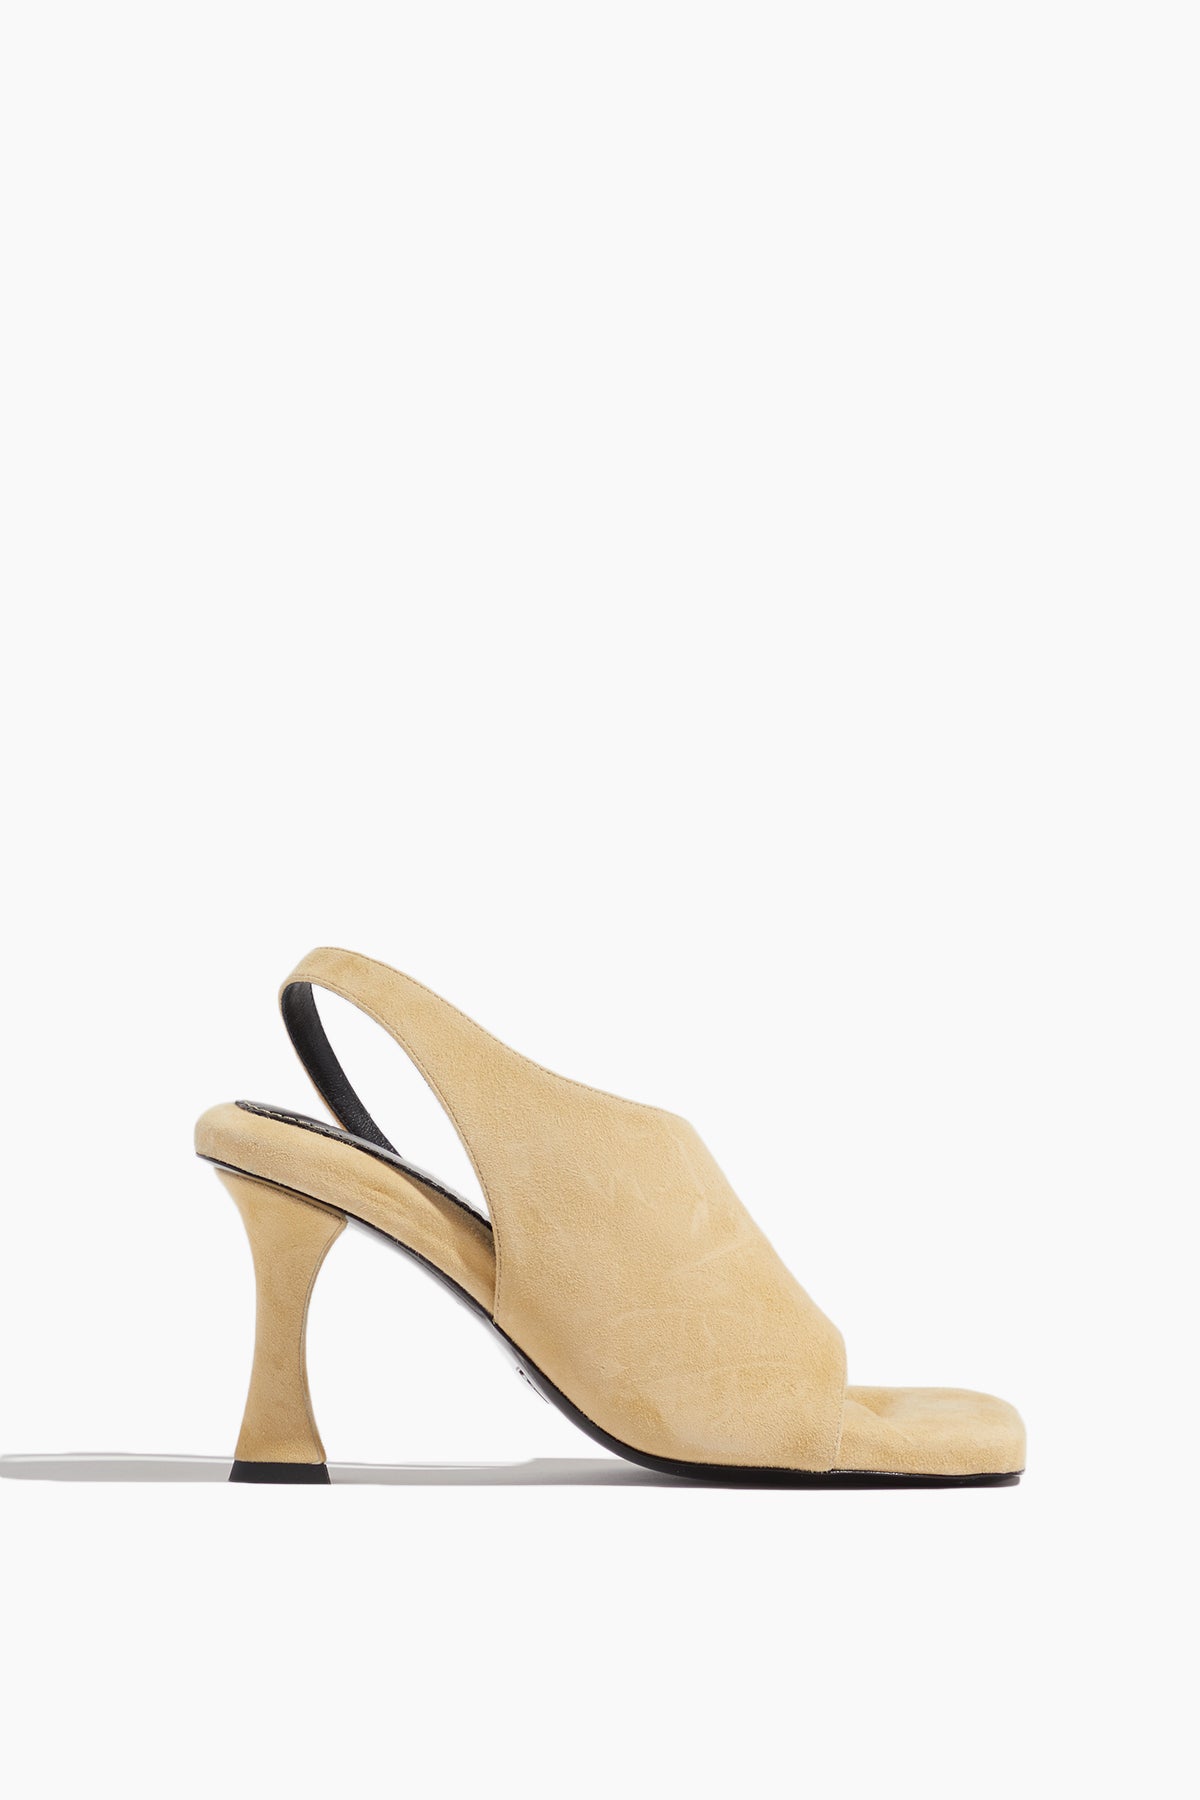 Proenza Schouler Shoes Sandals Square Asymmetric Sandal in Butter